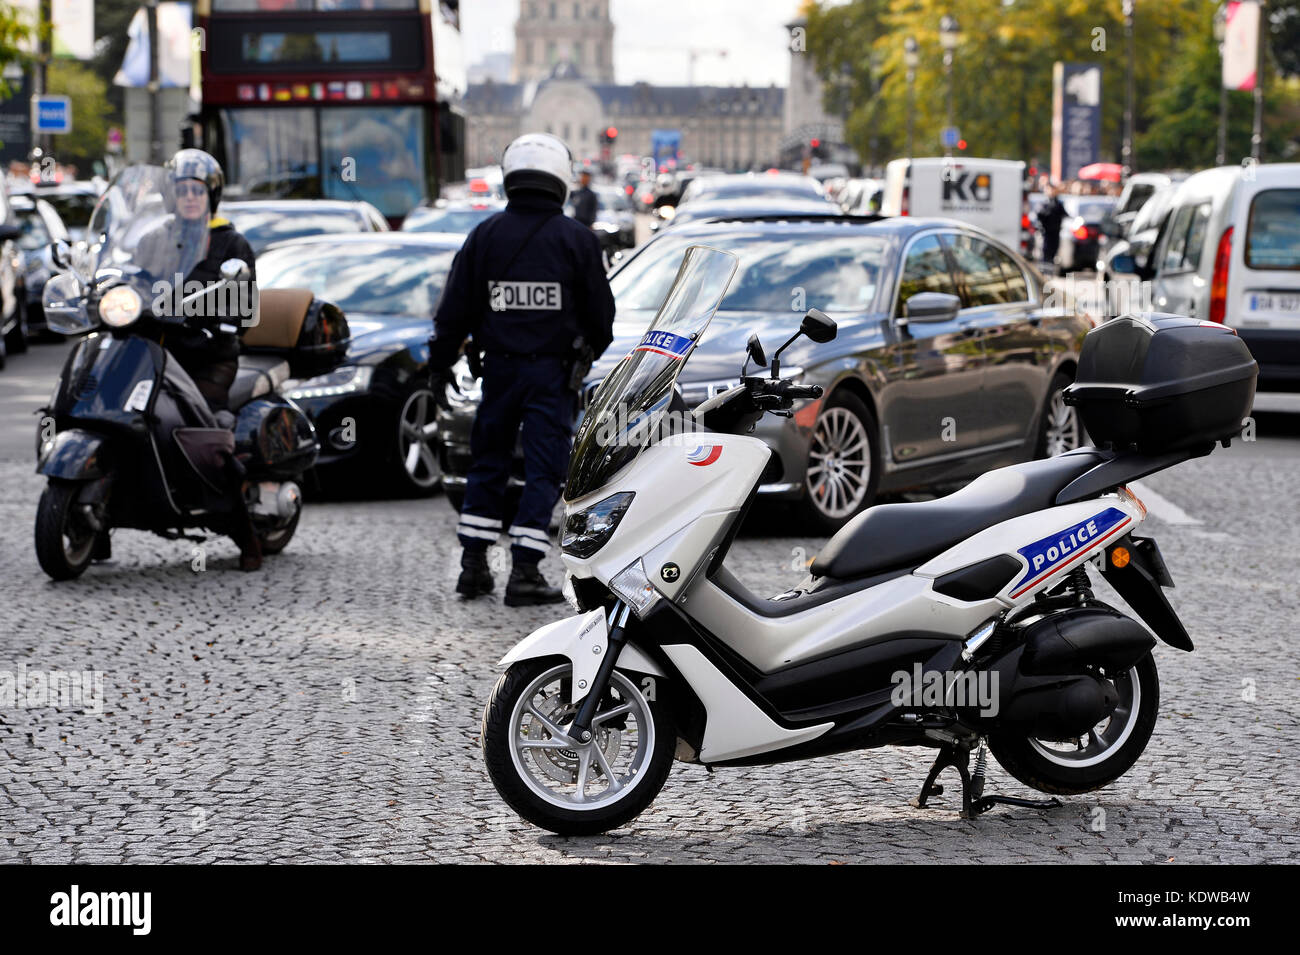 Police officer regulating traffic, Paris - France Stock Photo